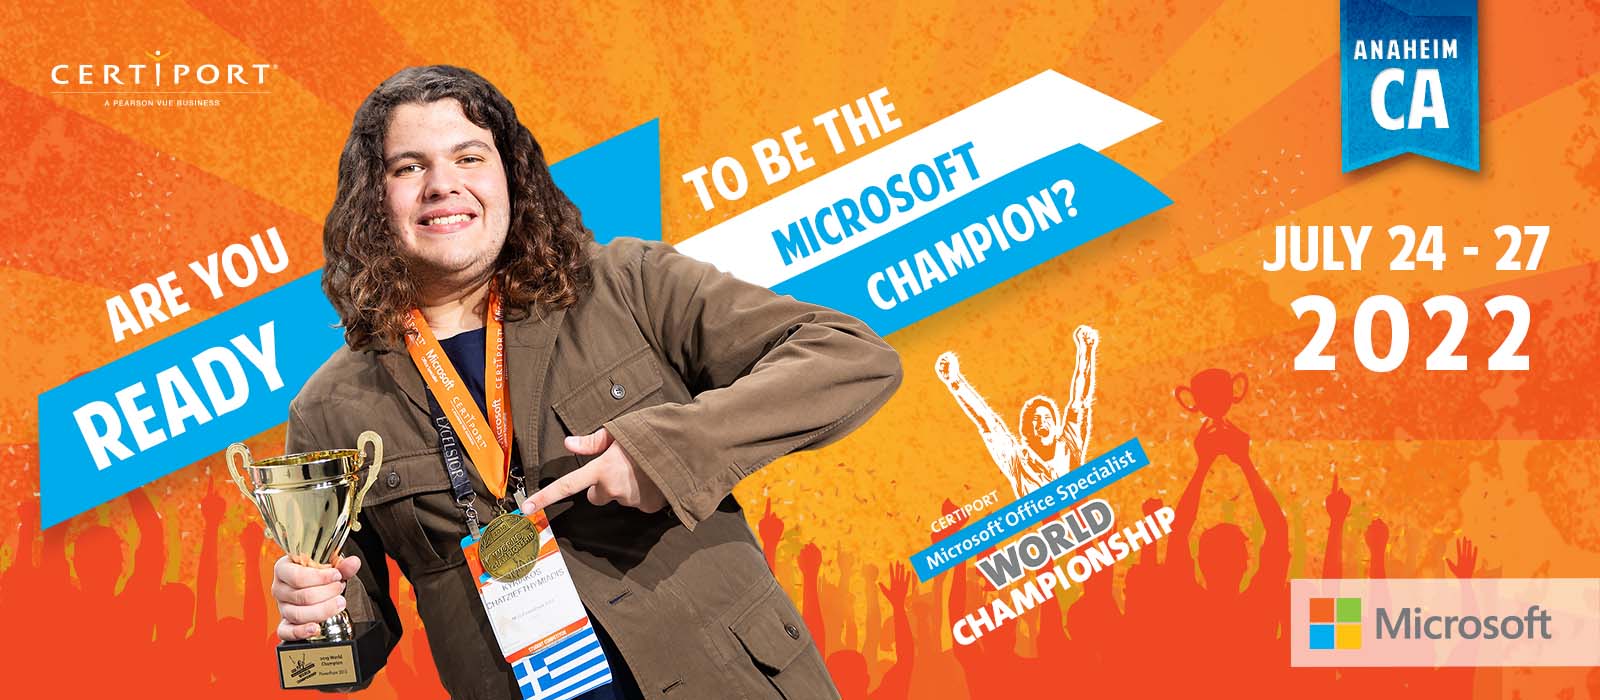 Microsoft Office Specialist World Championship New York, New York